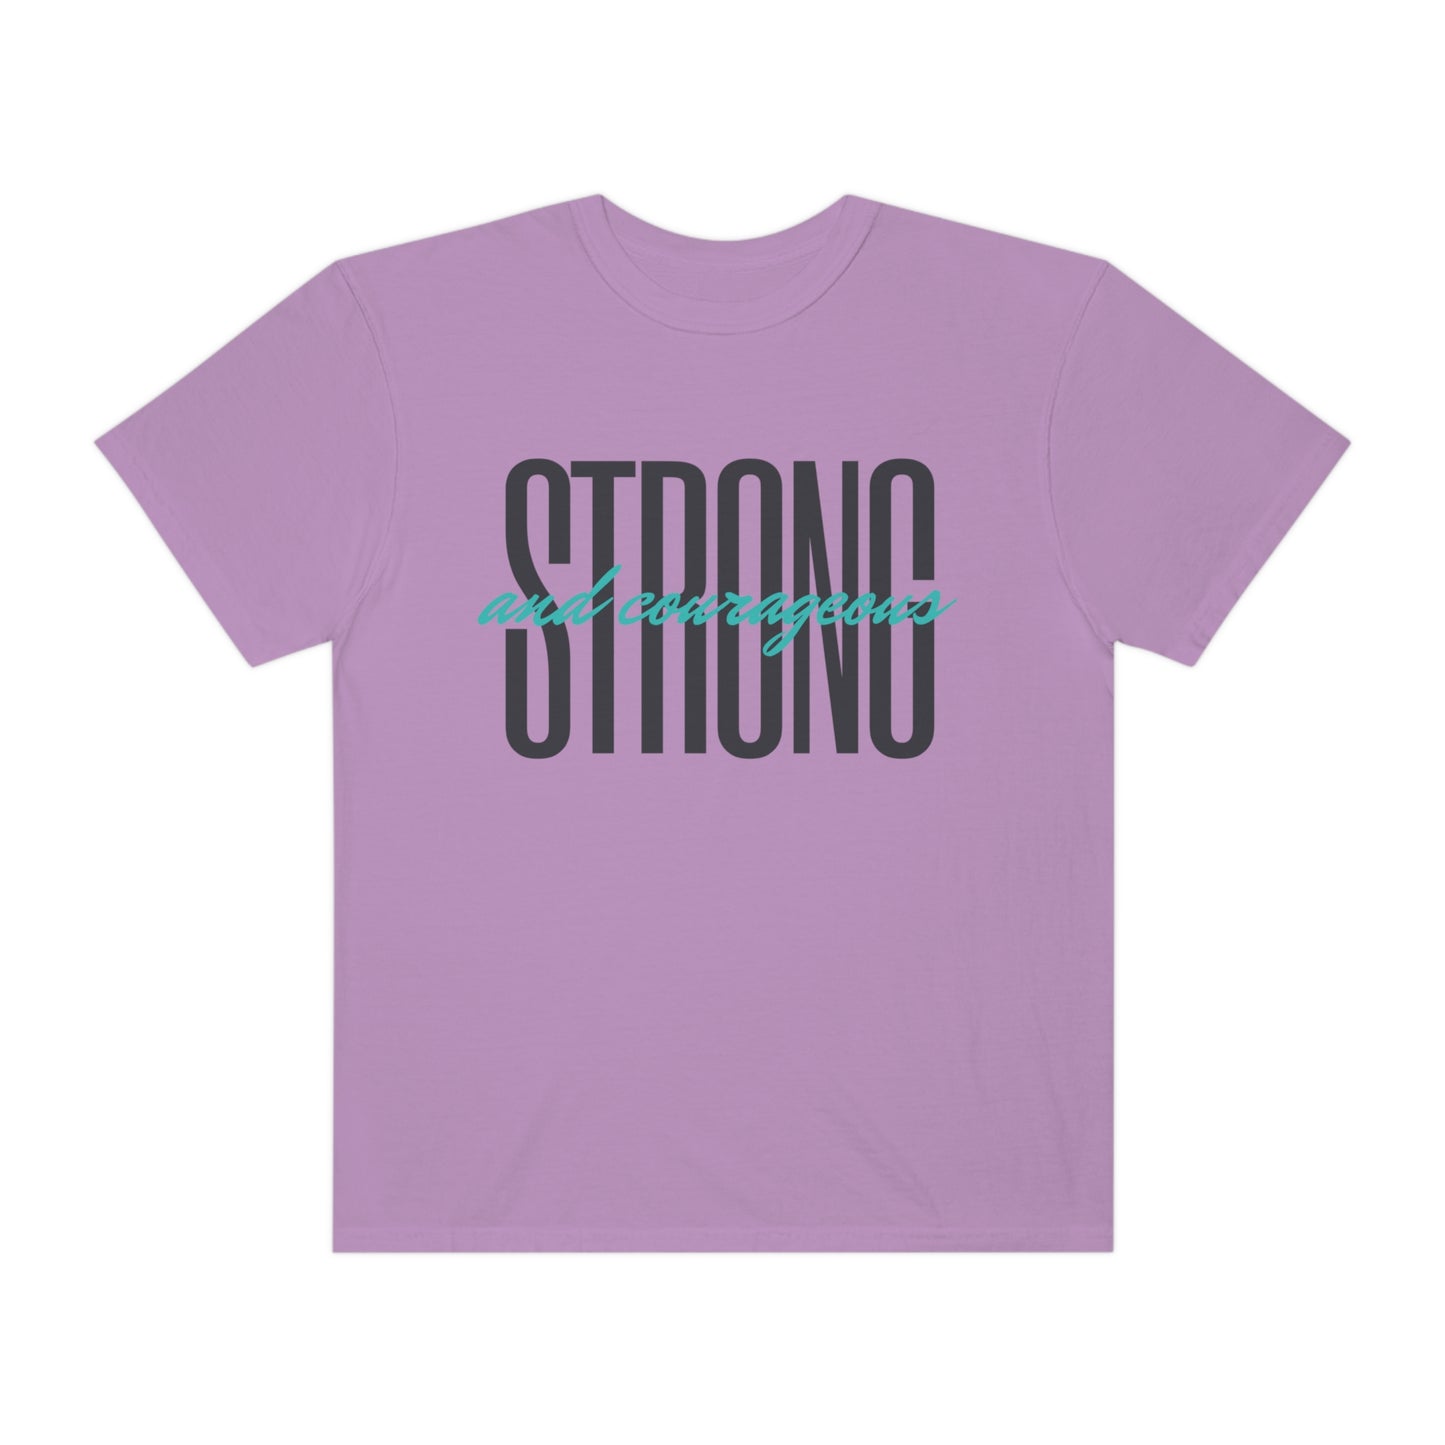 Strong & Courageous T-shirt